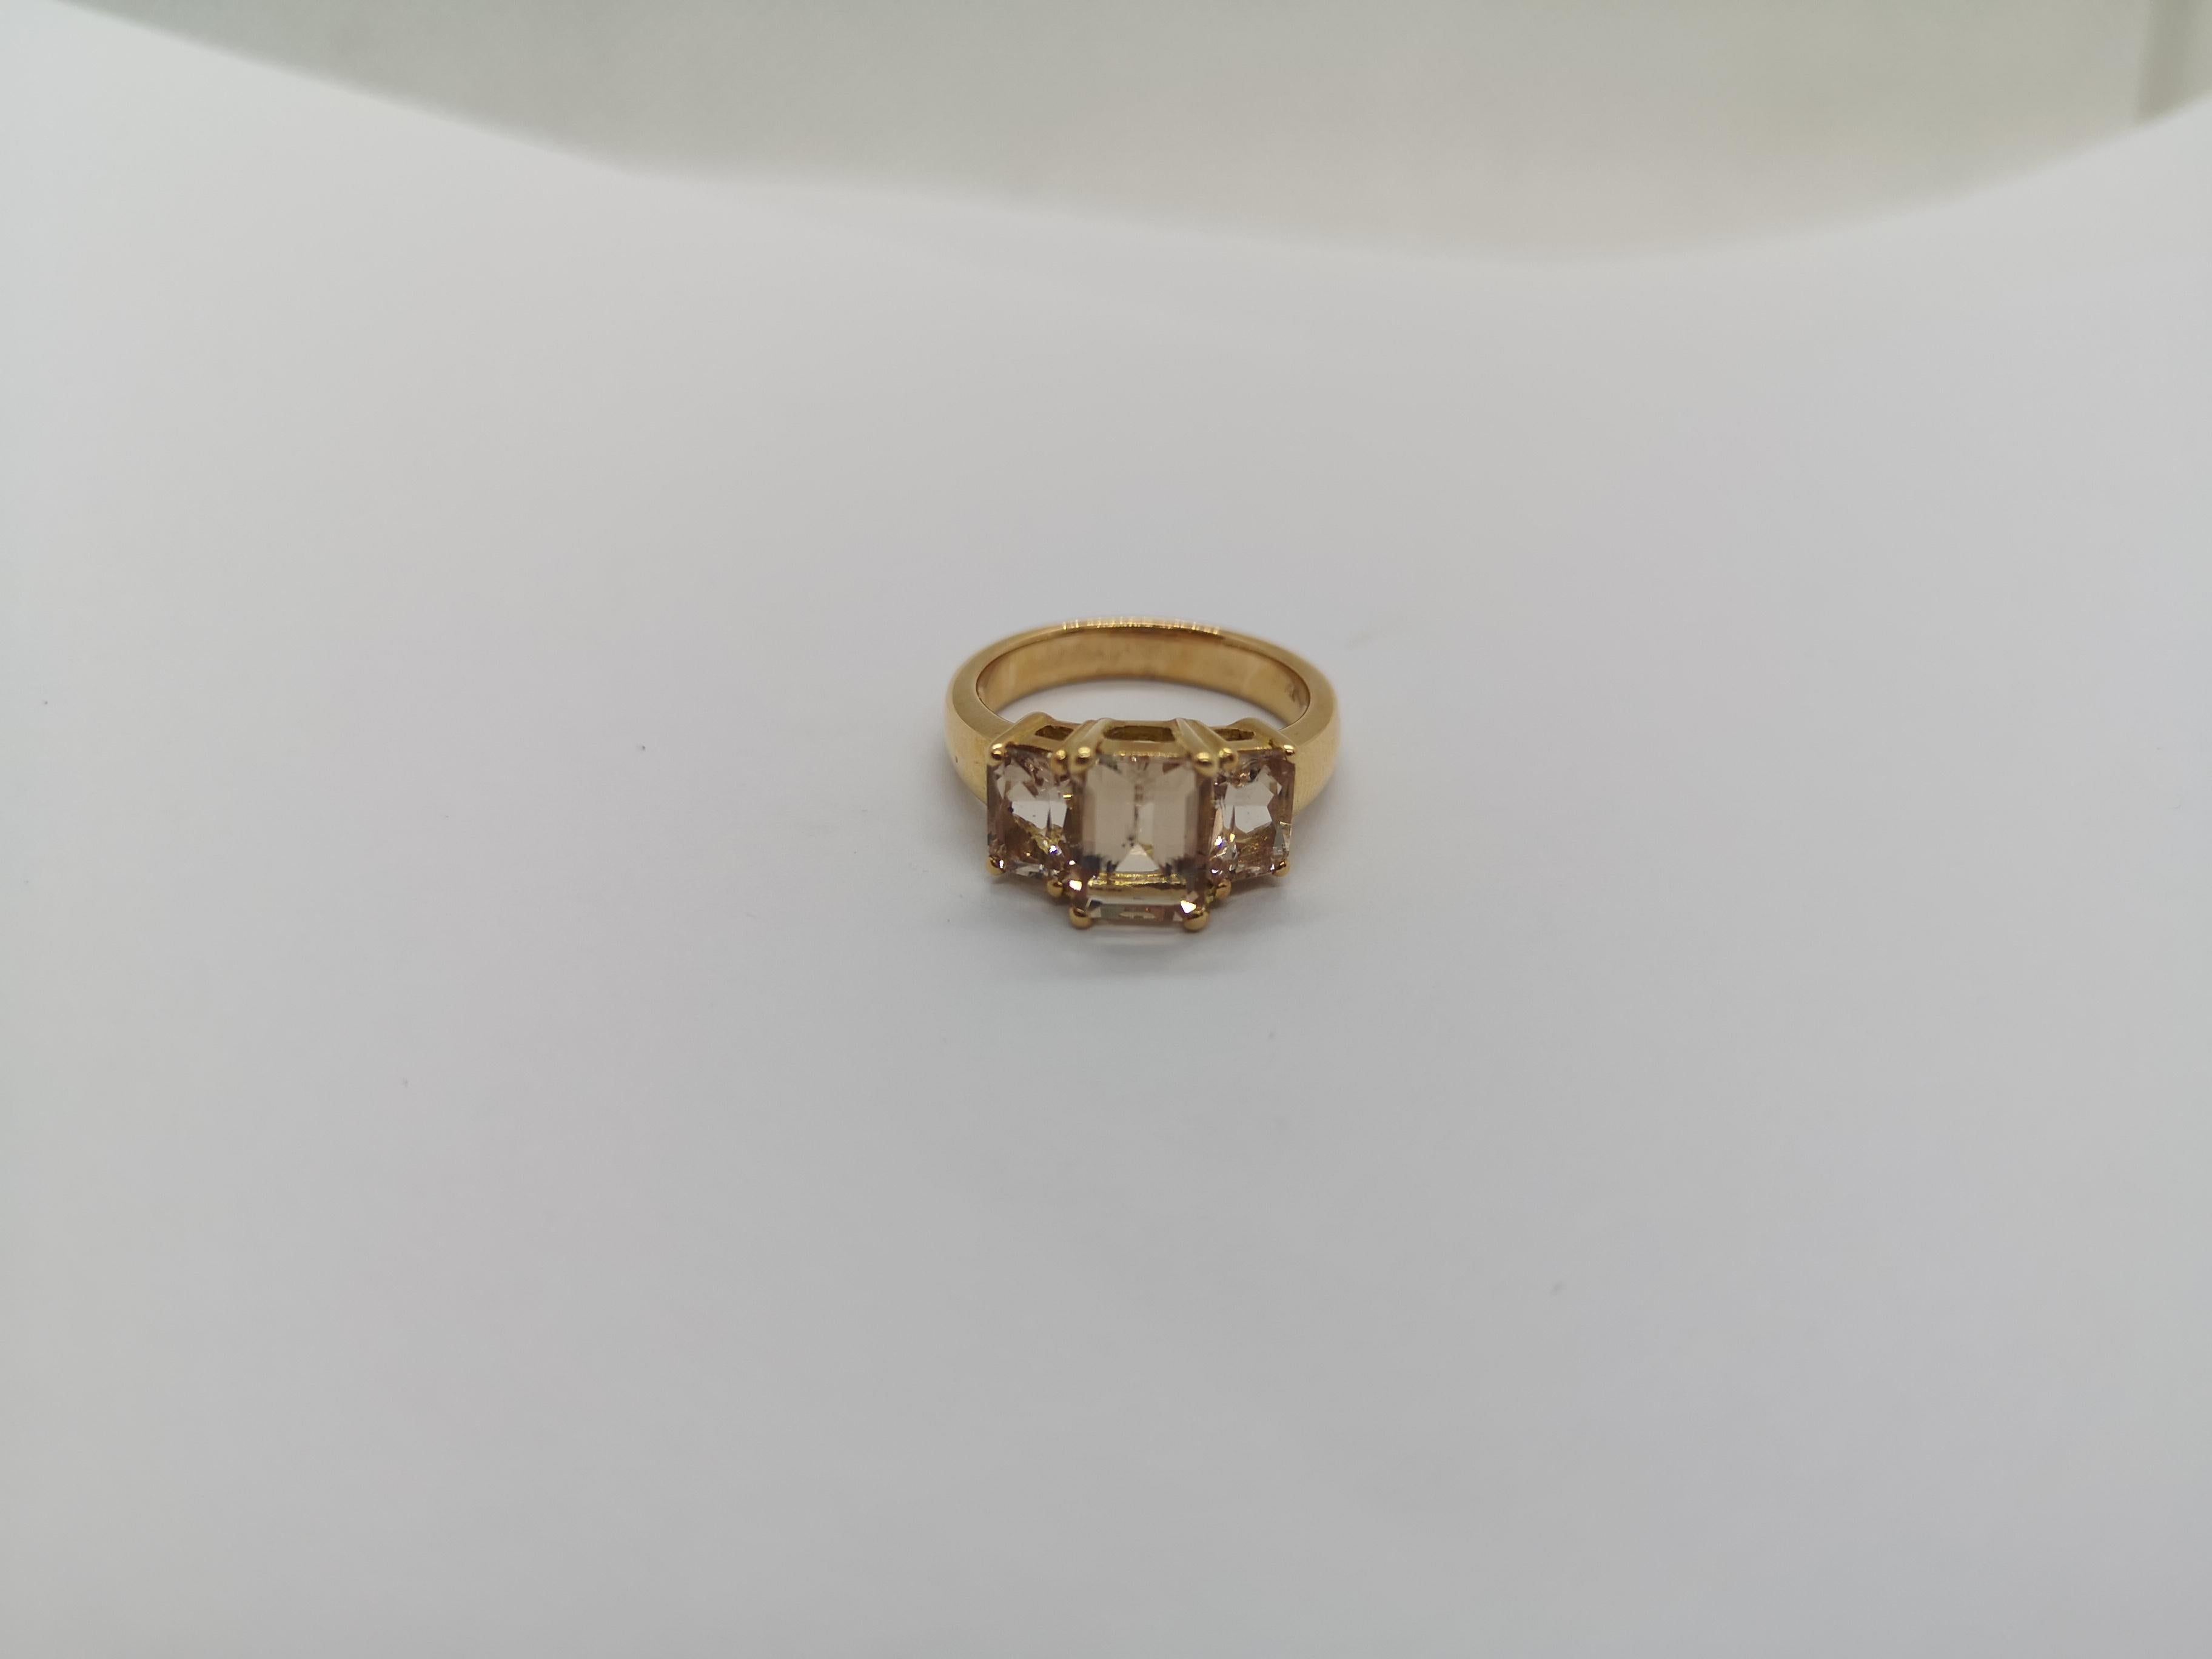 Morganite 3.10 carats Ring set in 18 Karat Rose Gold Settings 

Width: 1.3 cm
Length: 0.9 cm 
Ring Size: 52

